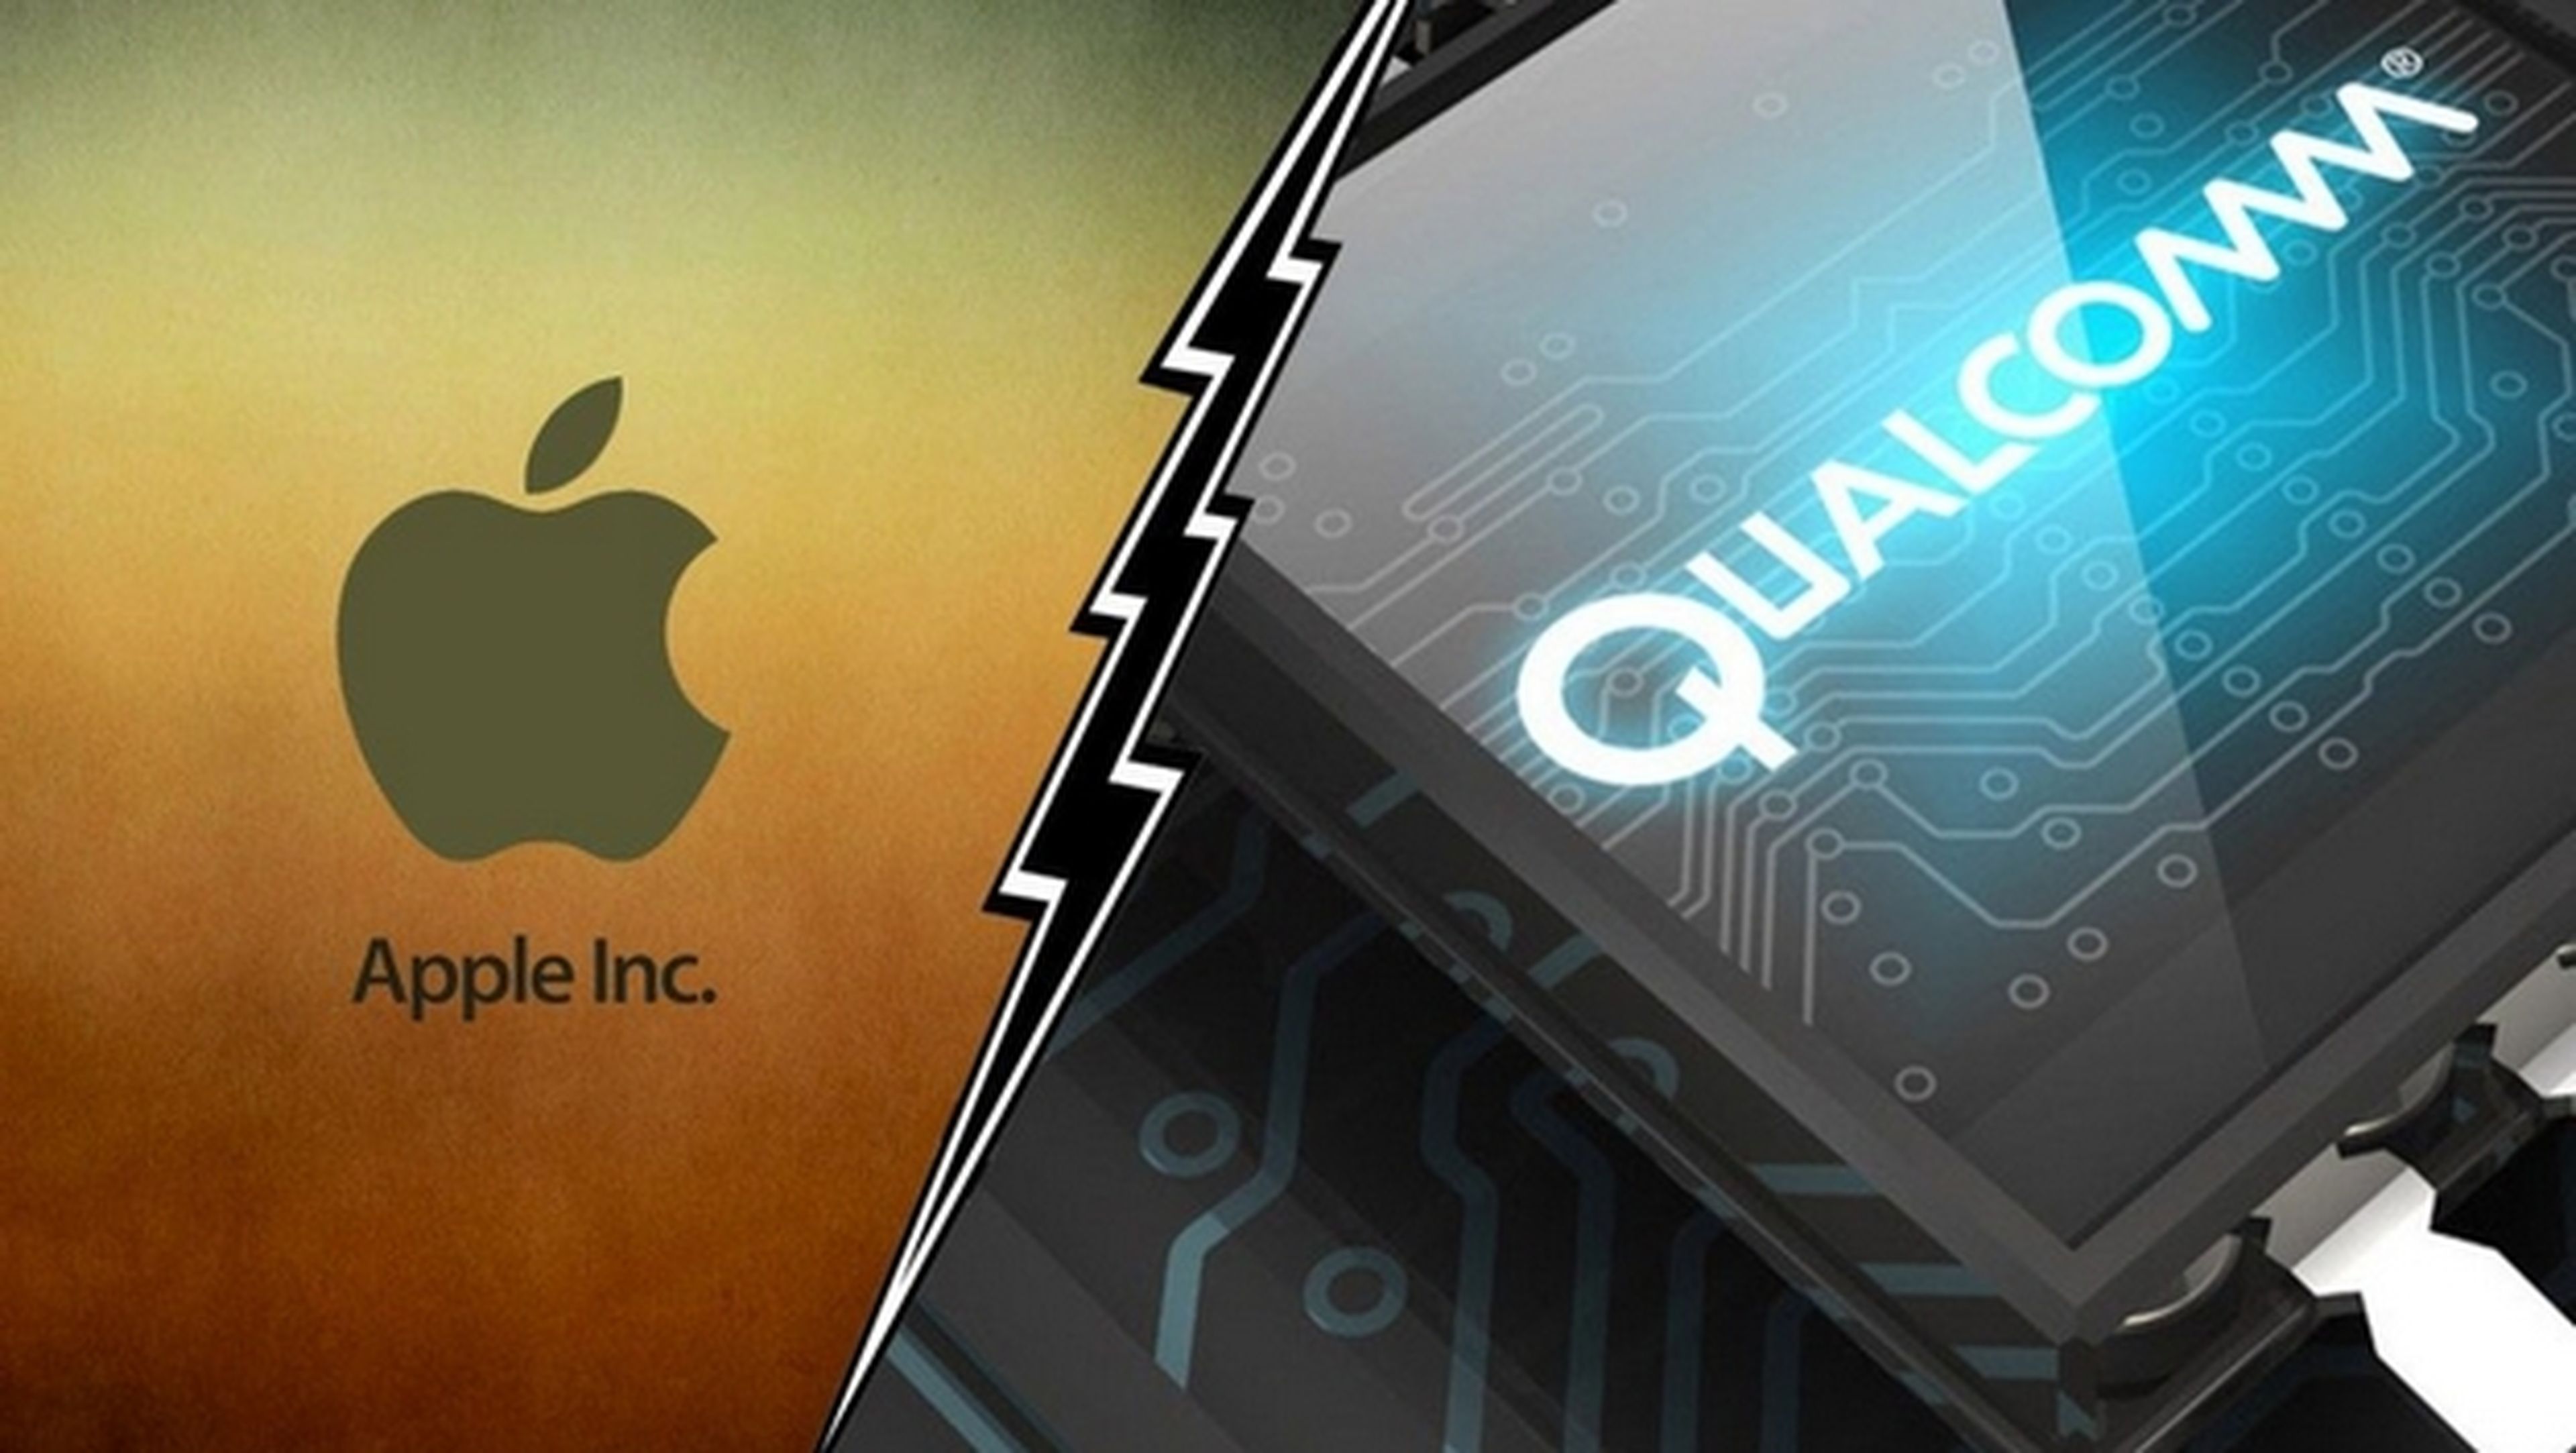 Qualcomm pide a un juez que prohíba la venta del iPhone en China